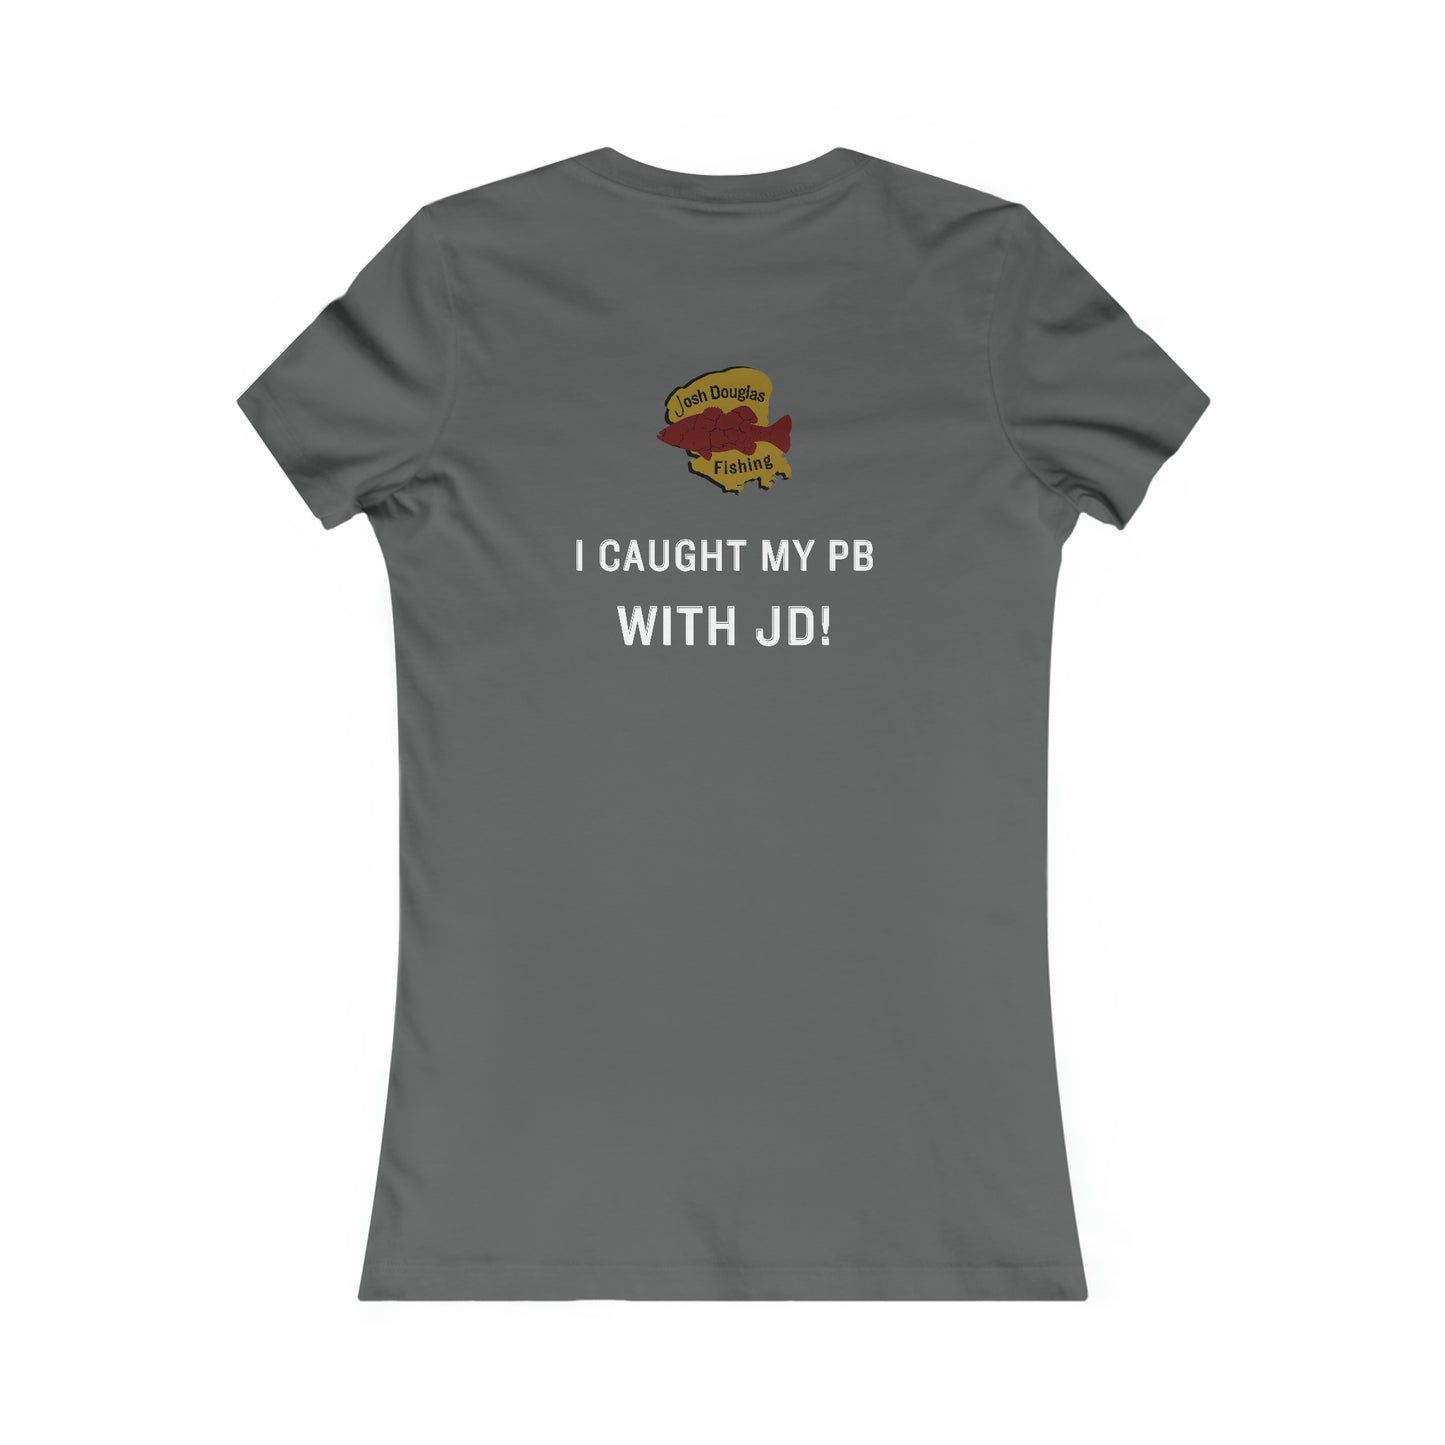 Caught My PB with JD Women's T-Shirt | Josh Douglas Fishing Apparel